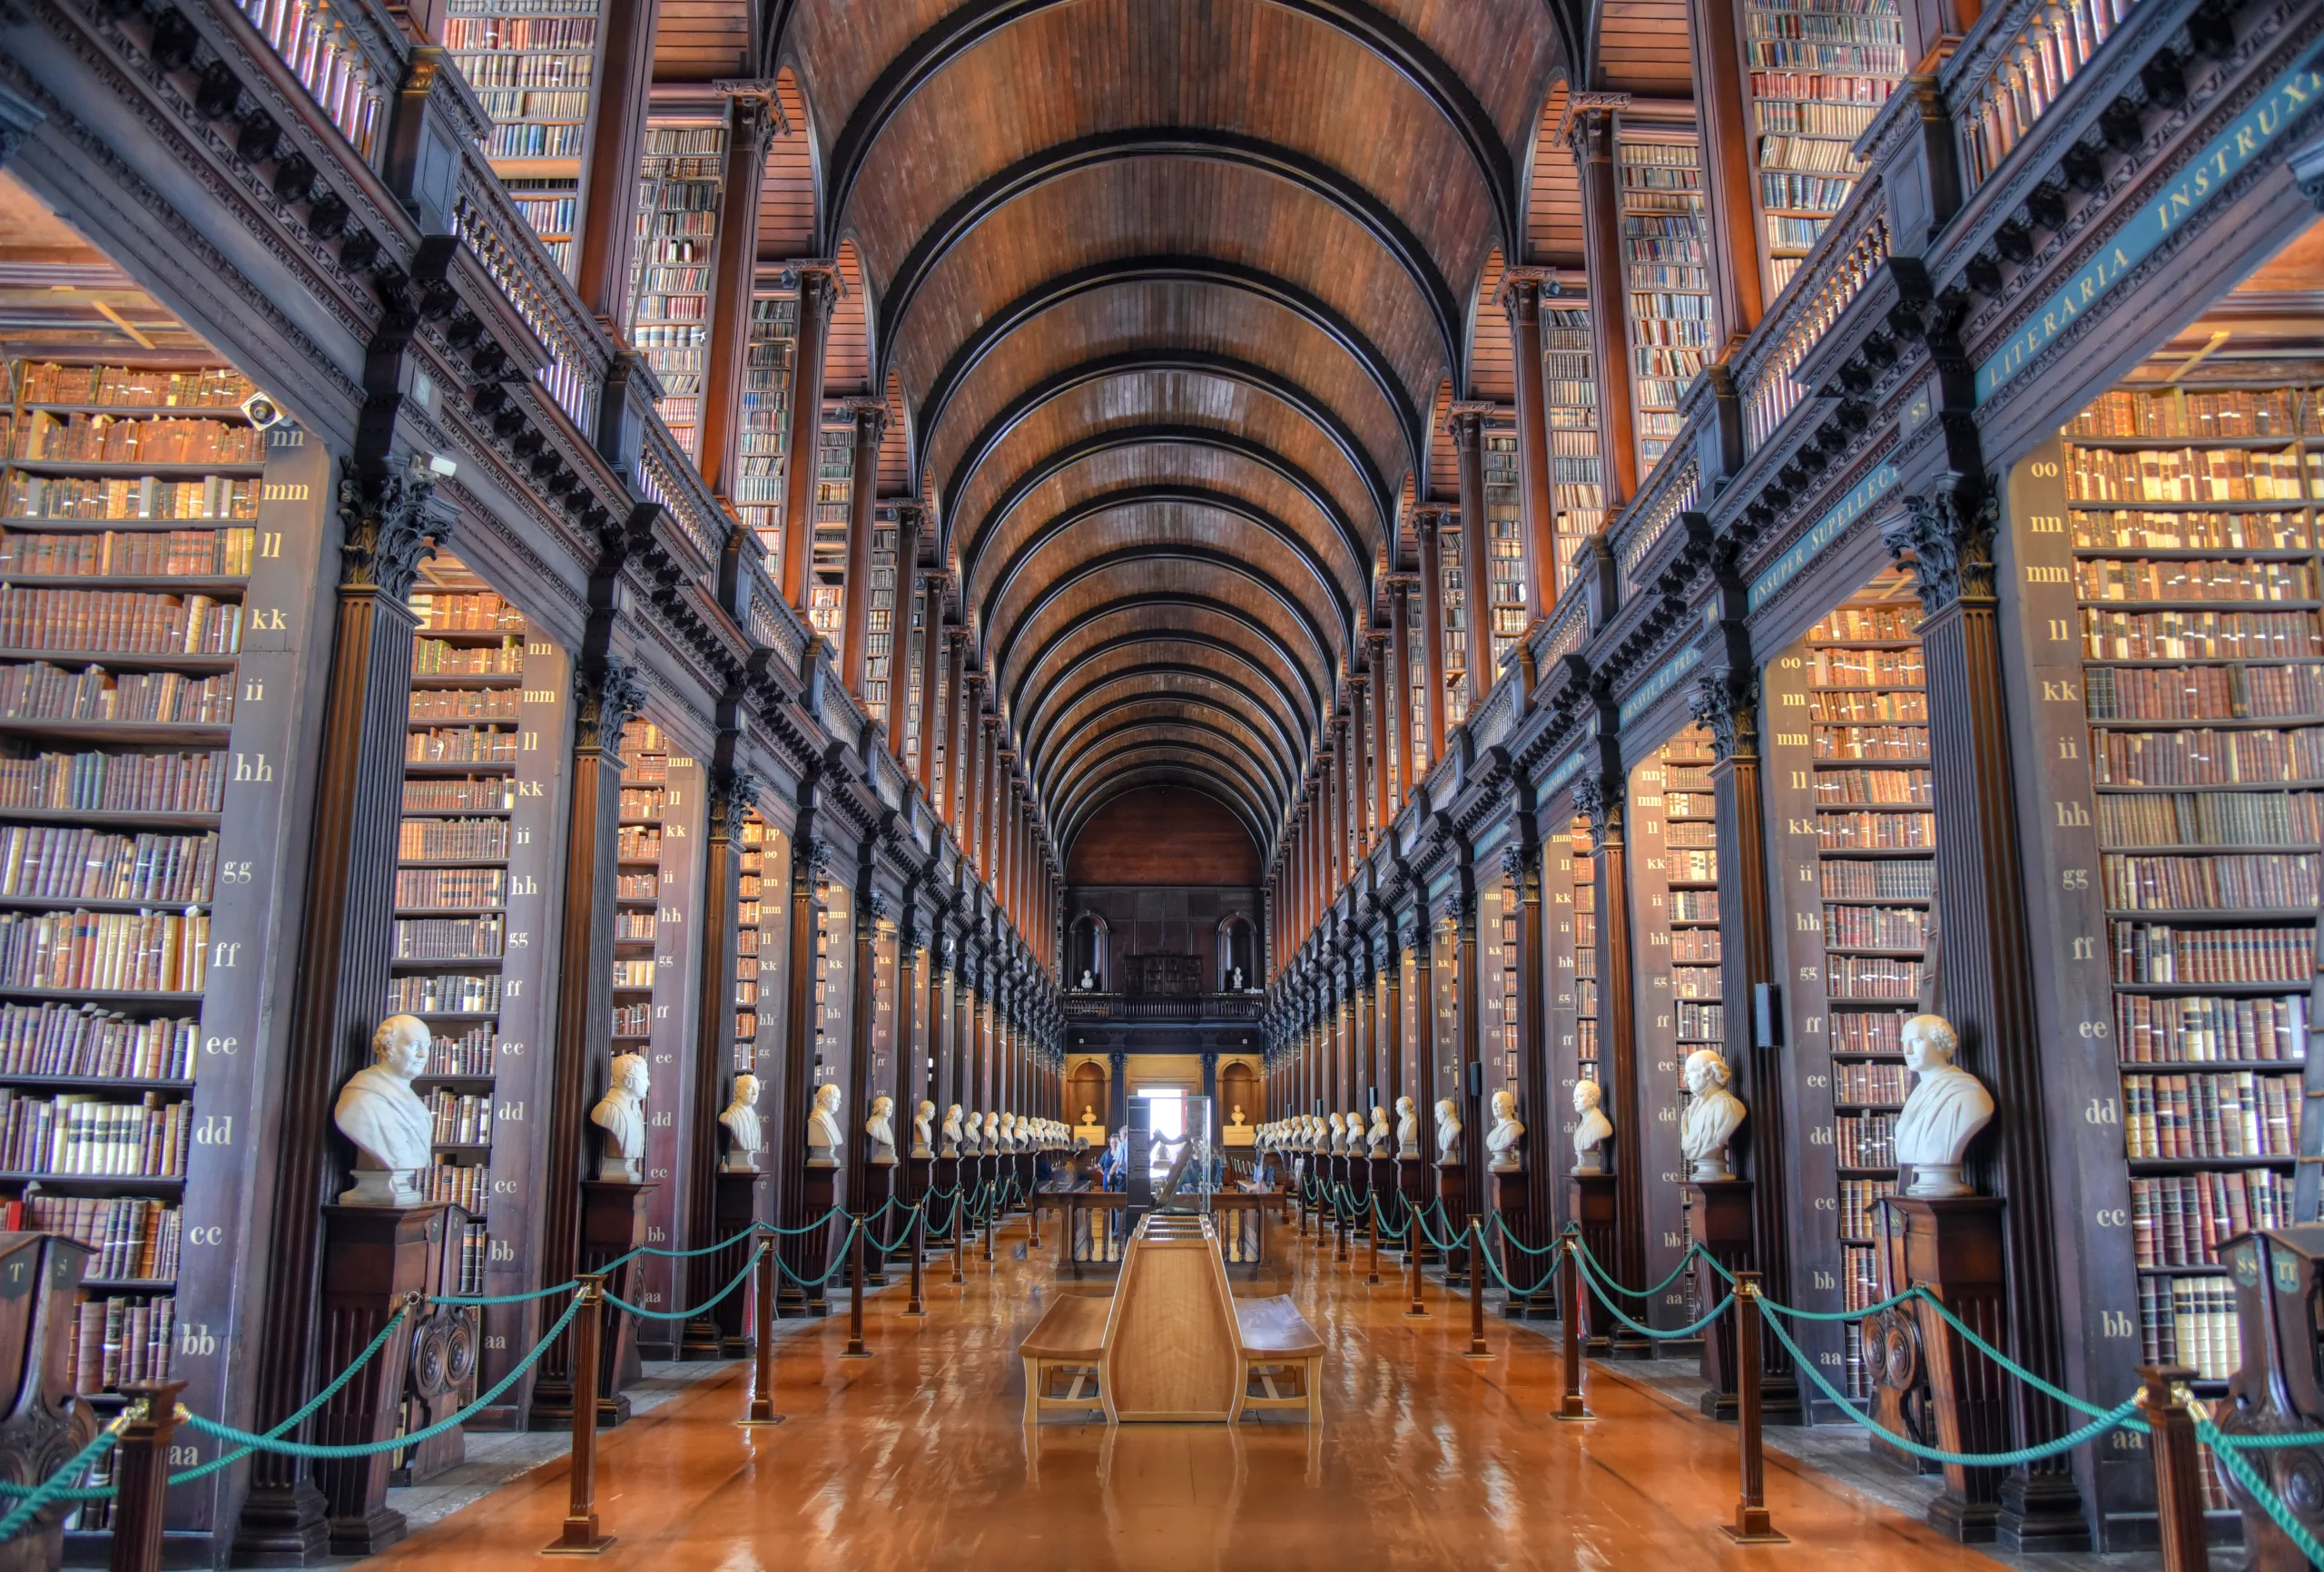 Trinity College library interior